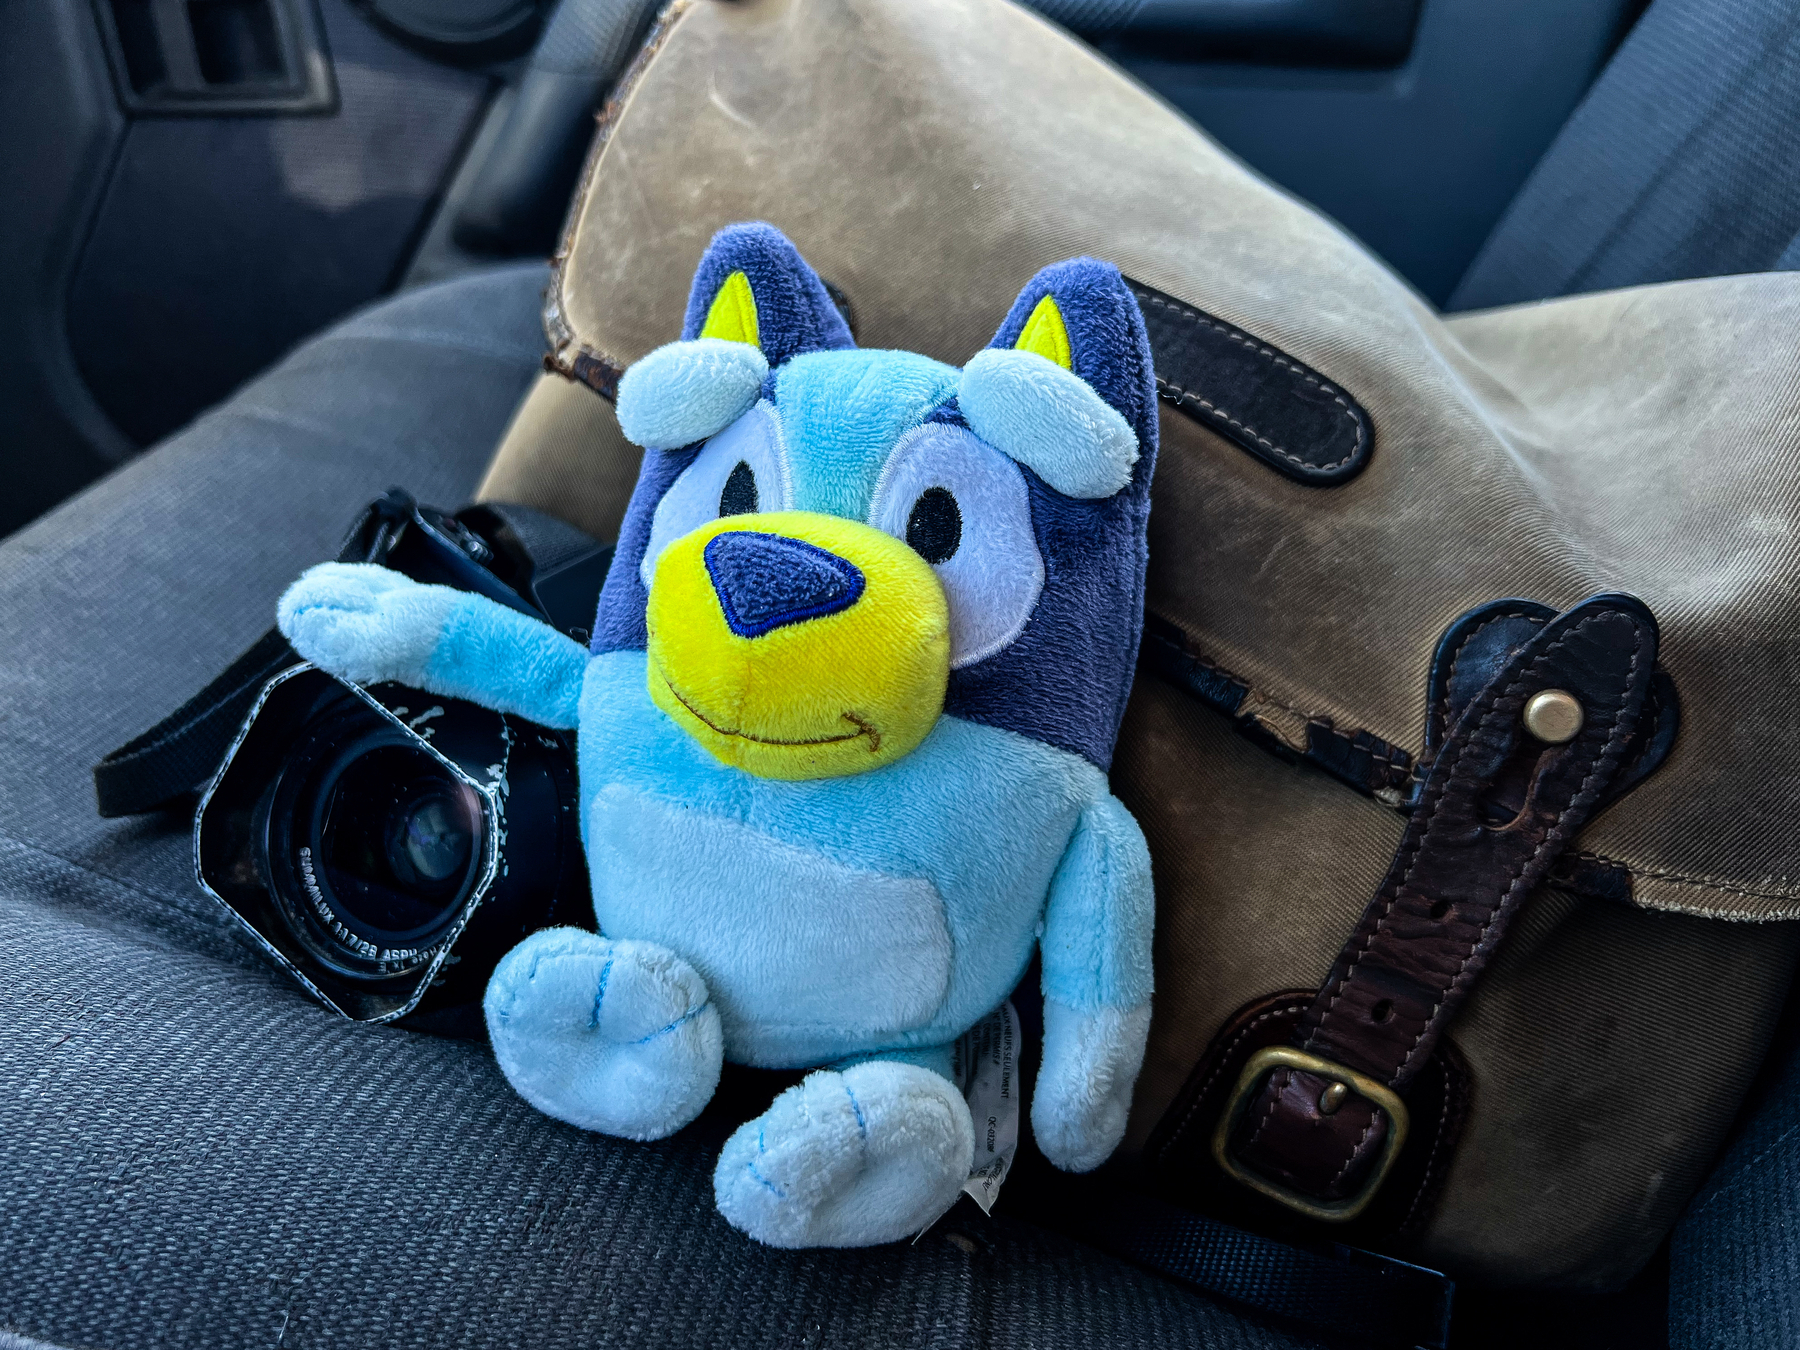 A plush Bluey sitting next to a camera on a beige canvas bag inside a car.